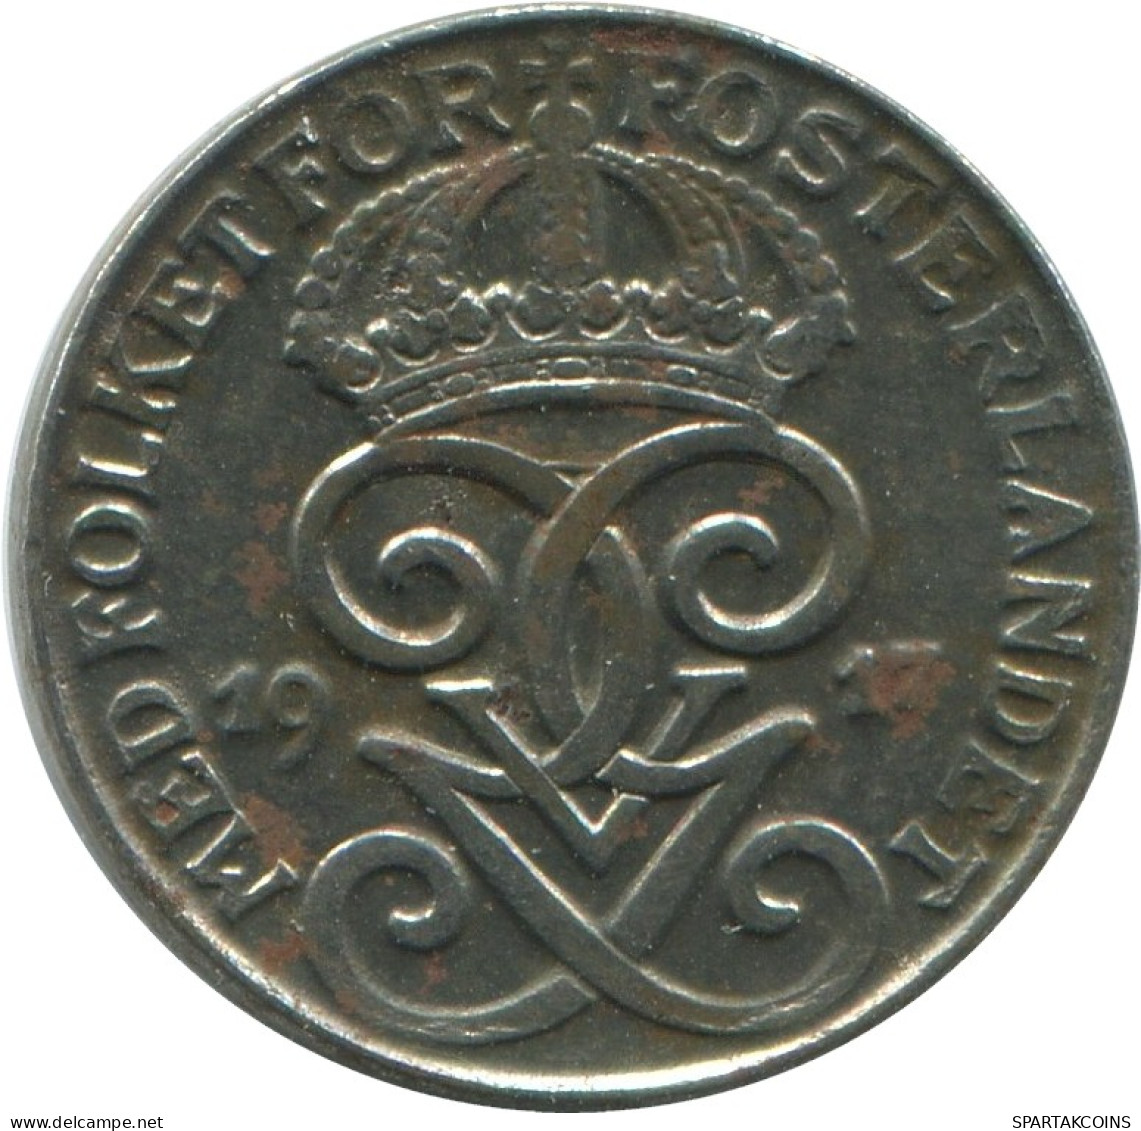 1 ORE 1917 SWEDEN Coin #AC530.2.U.A - Sweden